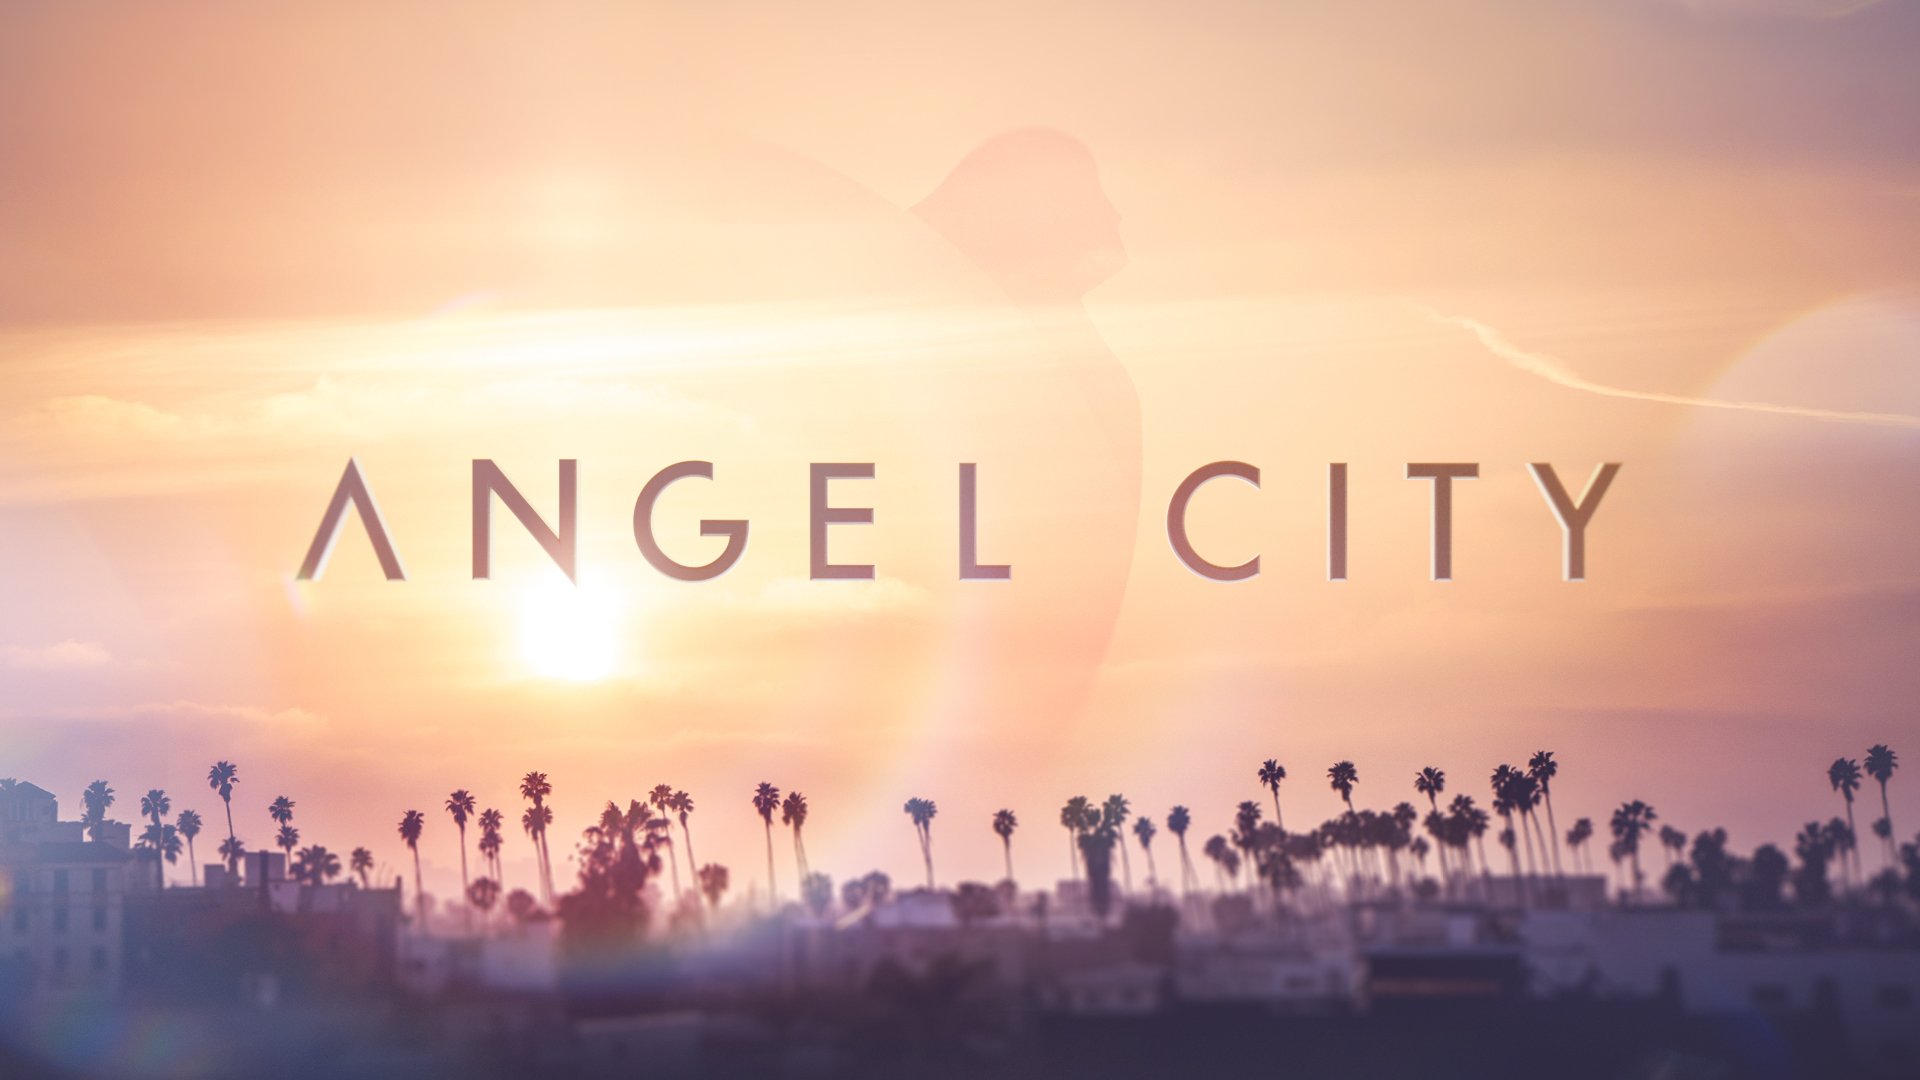 Angel-city-v1-01.jpg